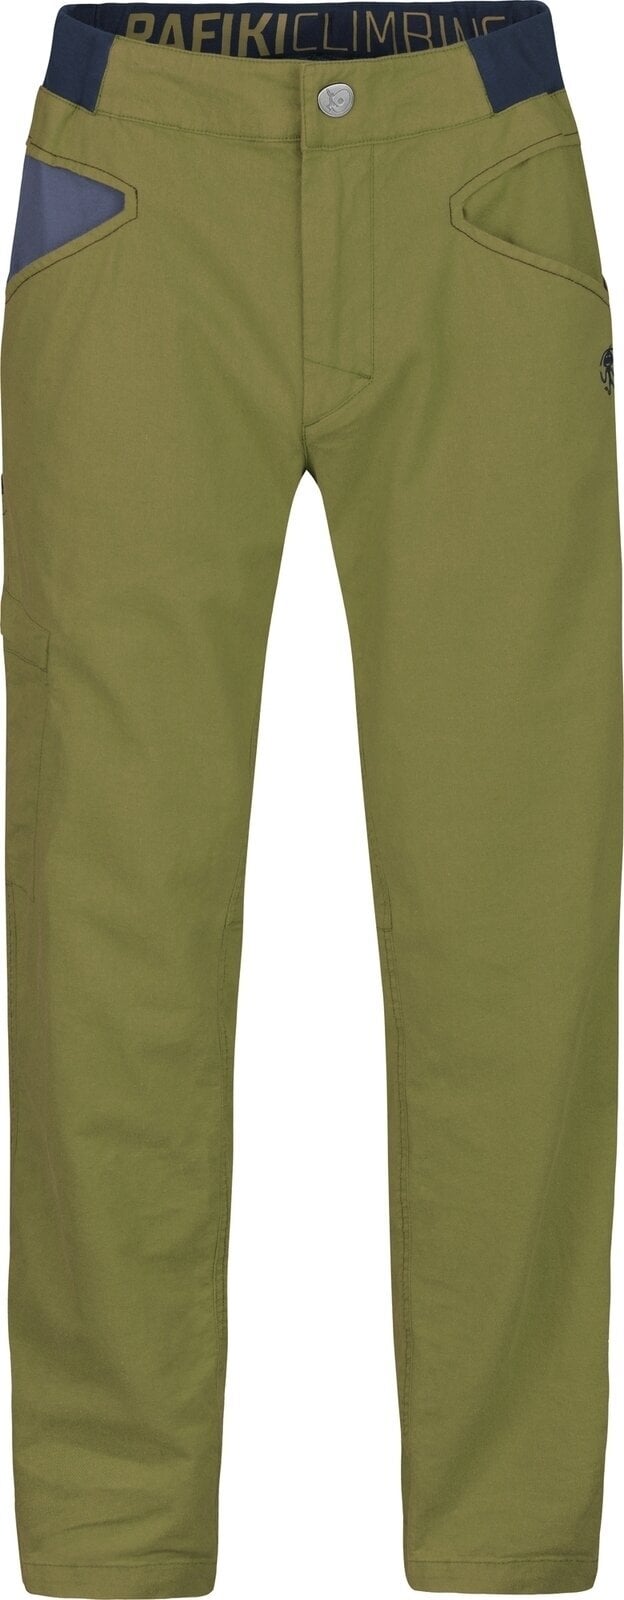 Outdoorové kalhoty Rafiki Grip Man Pants Avocado L Outdoorové kalhoty